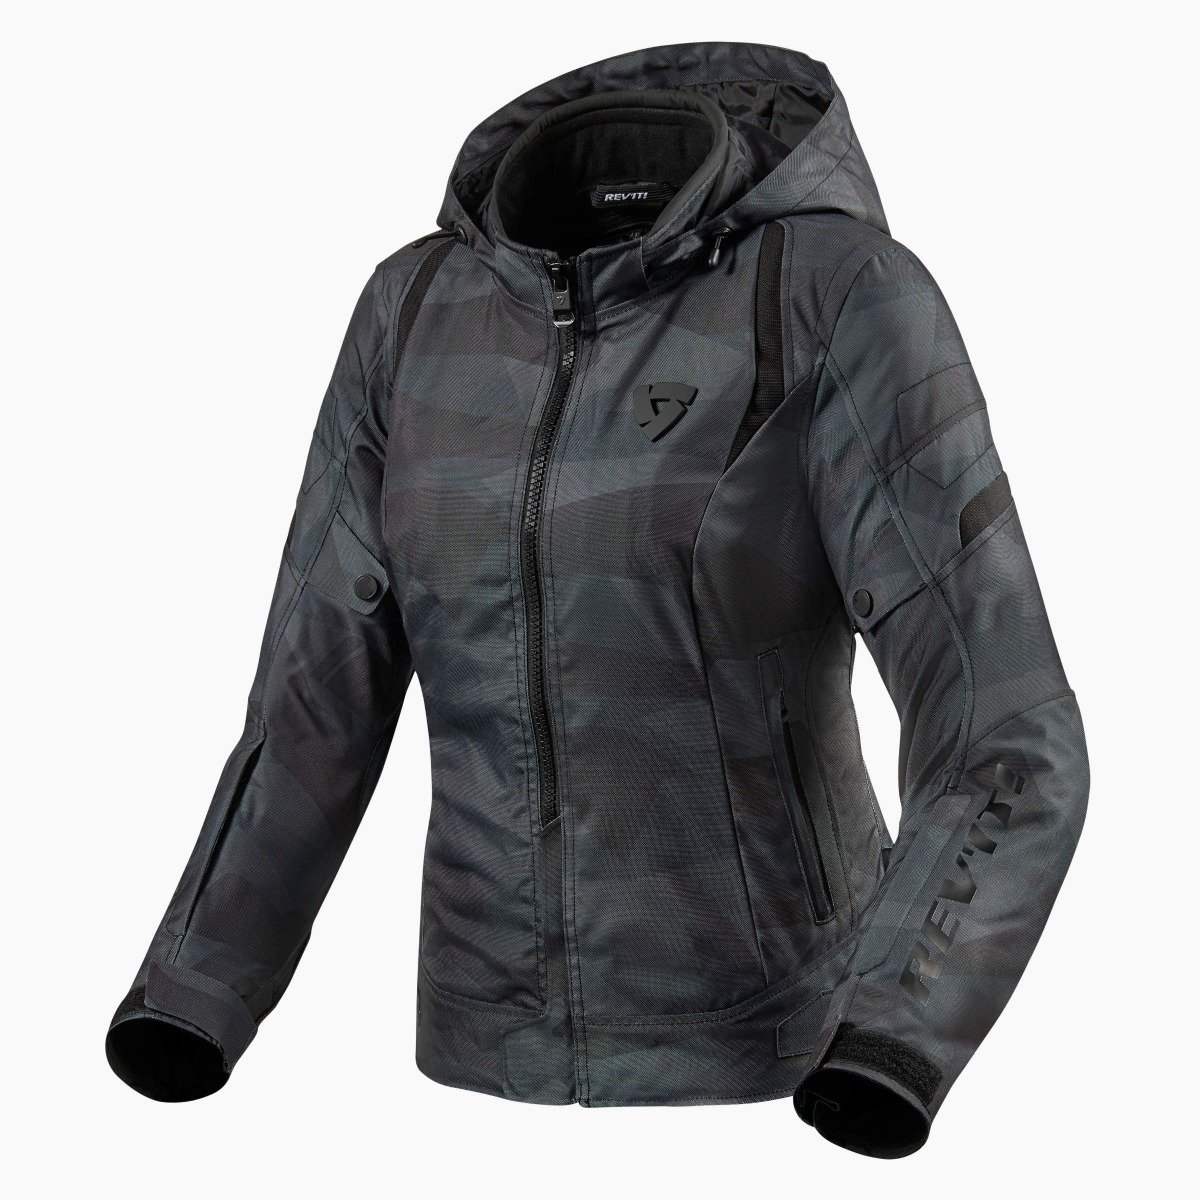 Image of REV'IT! Flare 2 Jacket Lady Camo Black Gray Size 34 EN